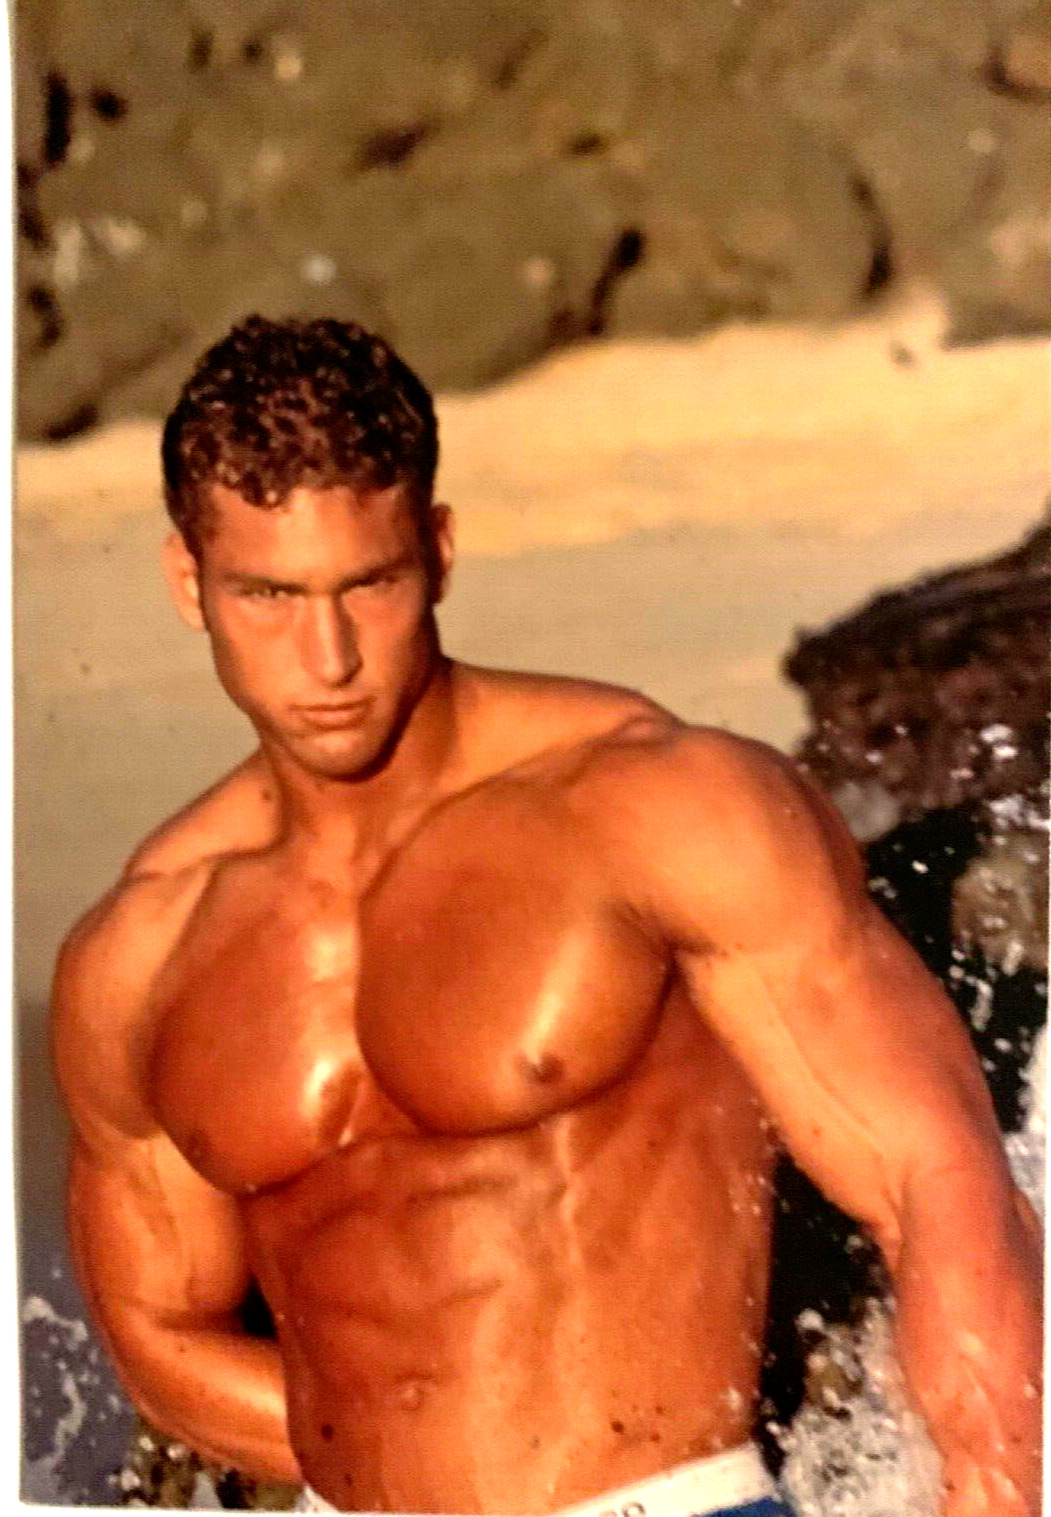 Shirtless Muscular Male Beefcake Photo 4 X 6